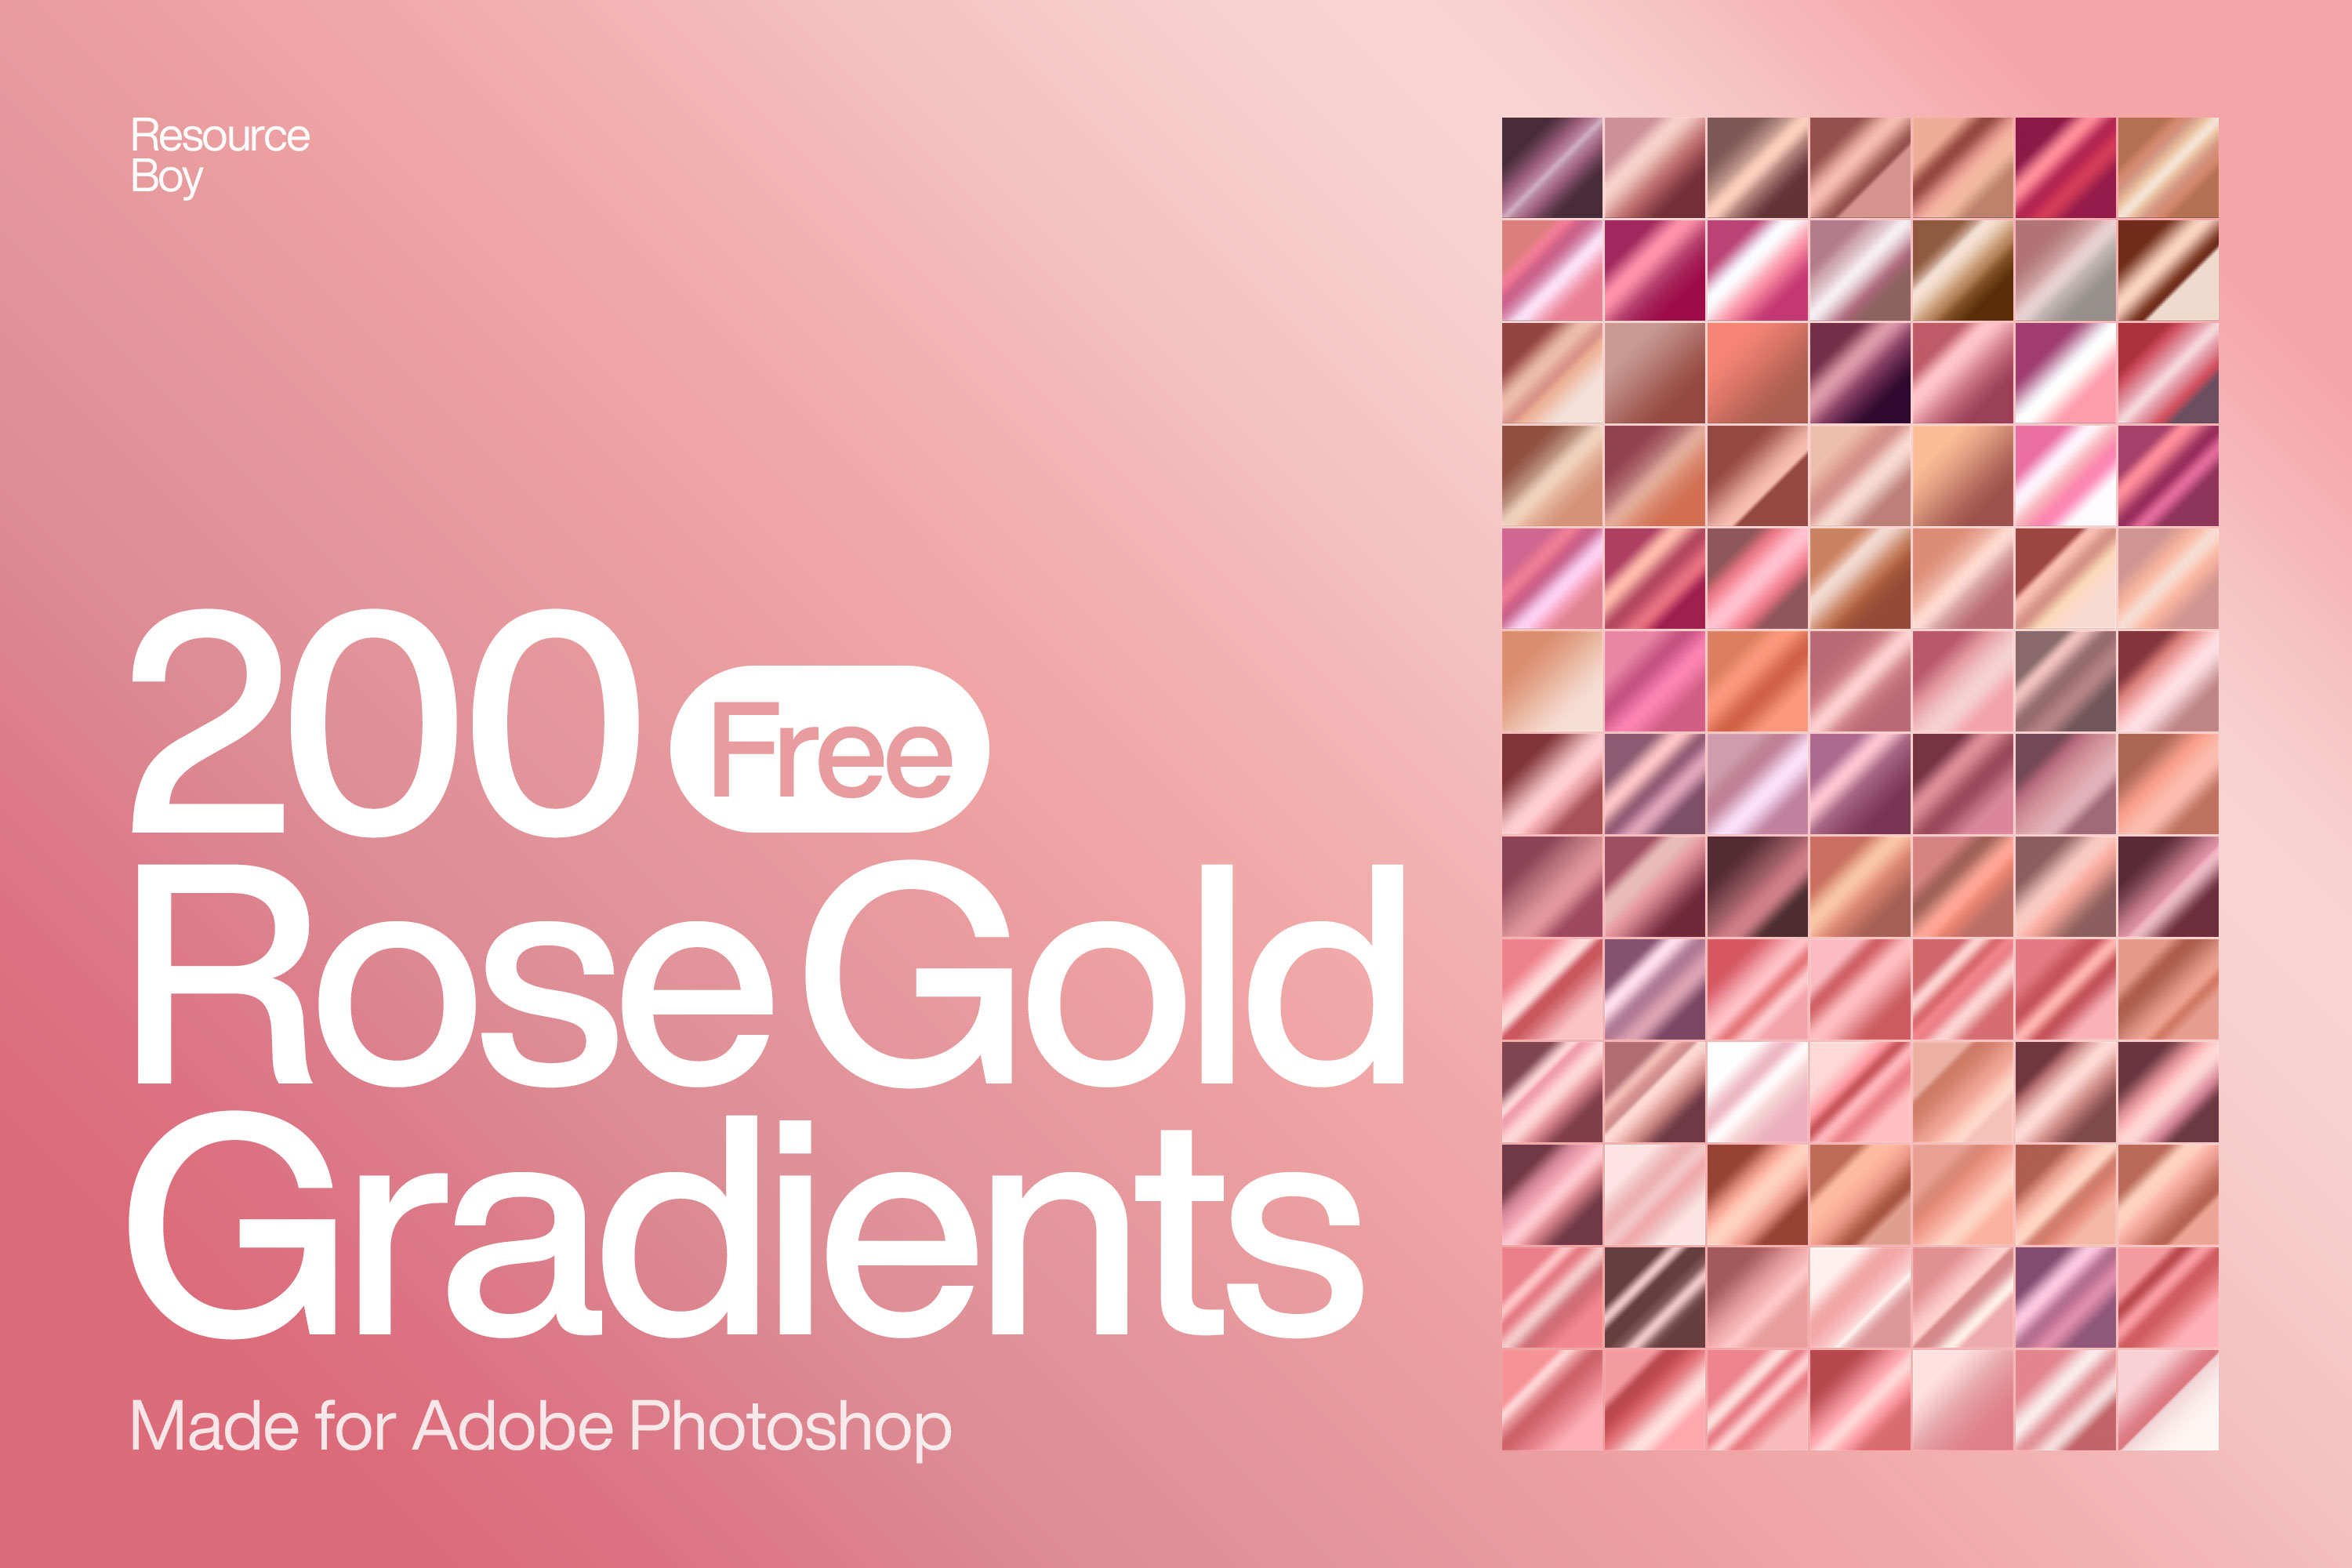 200 Rose Gold Photoshop Gradients (FREE) - Resource Boy